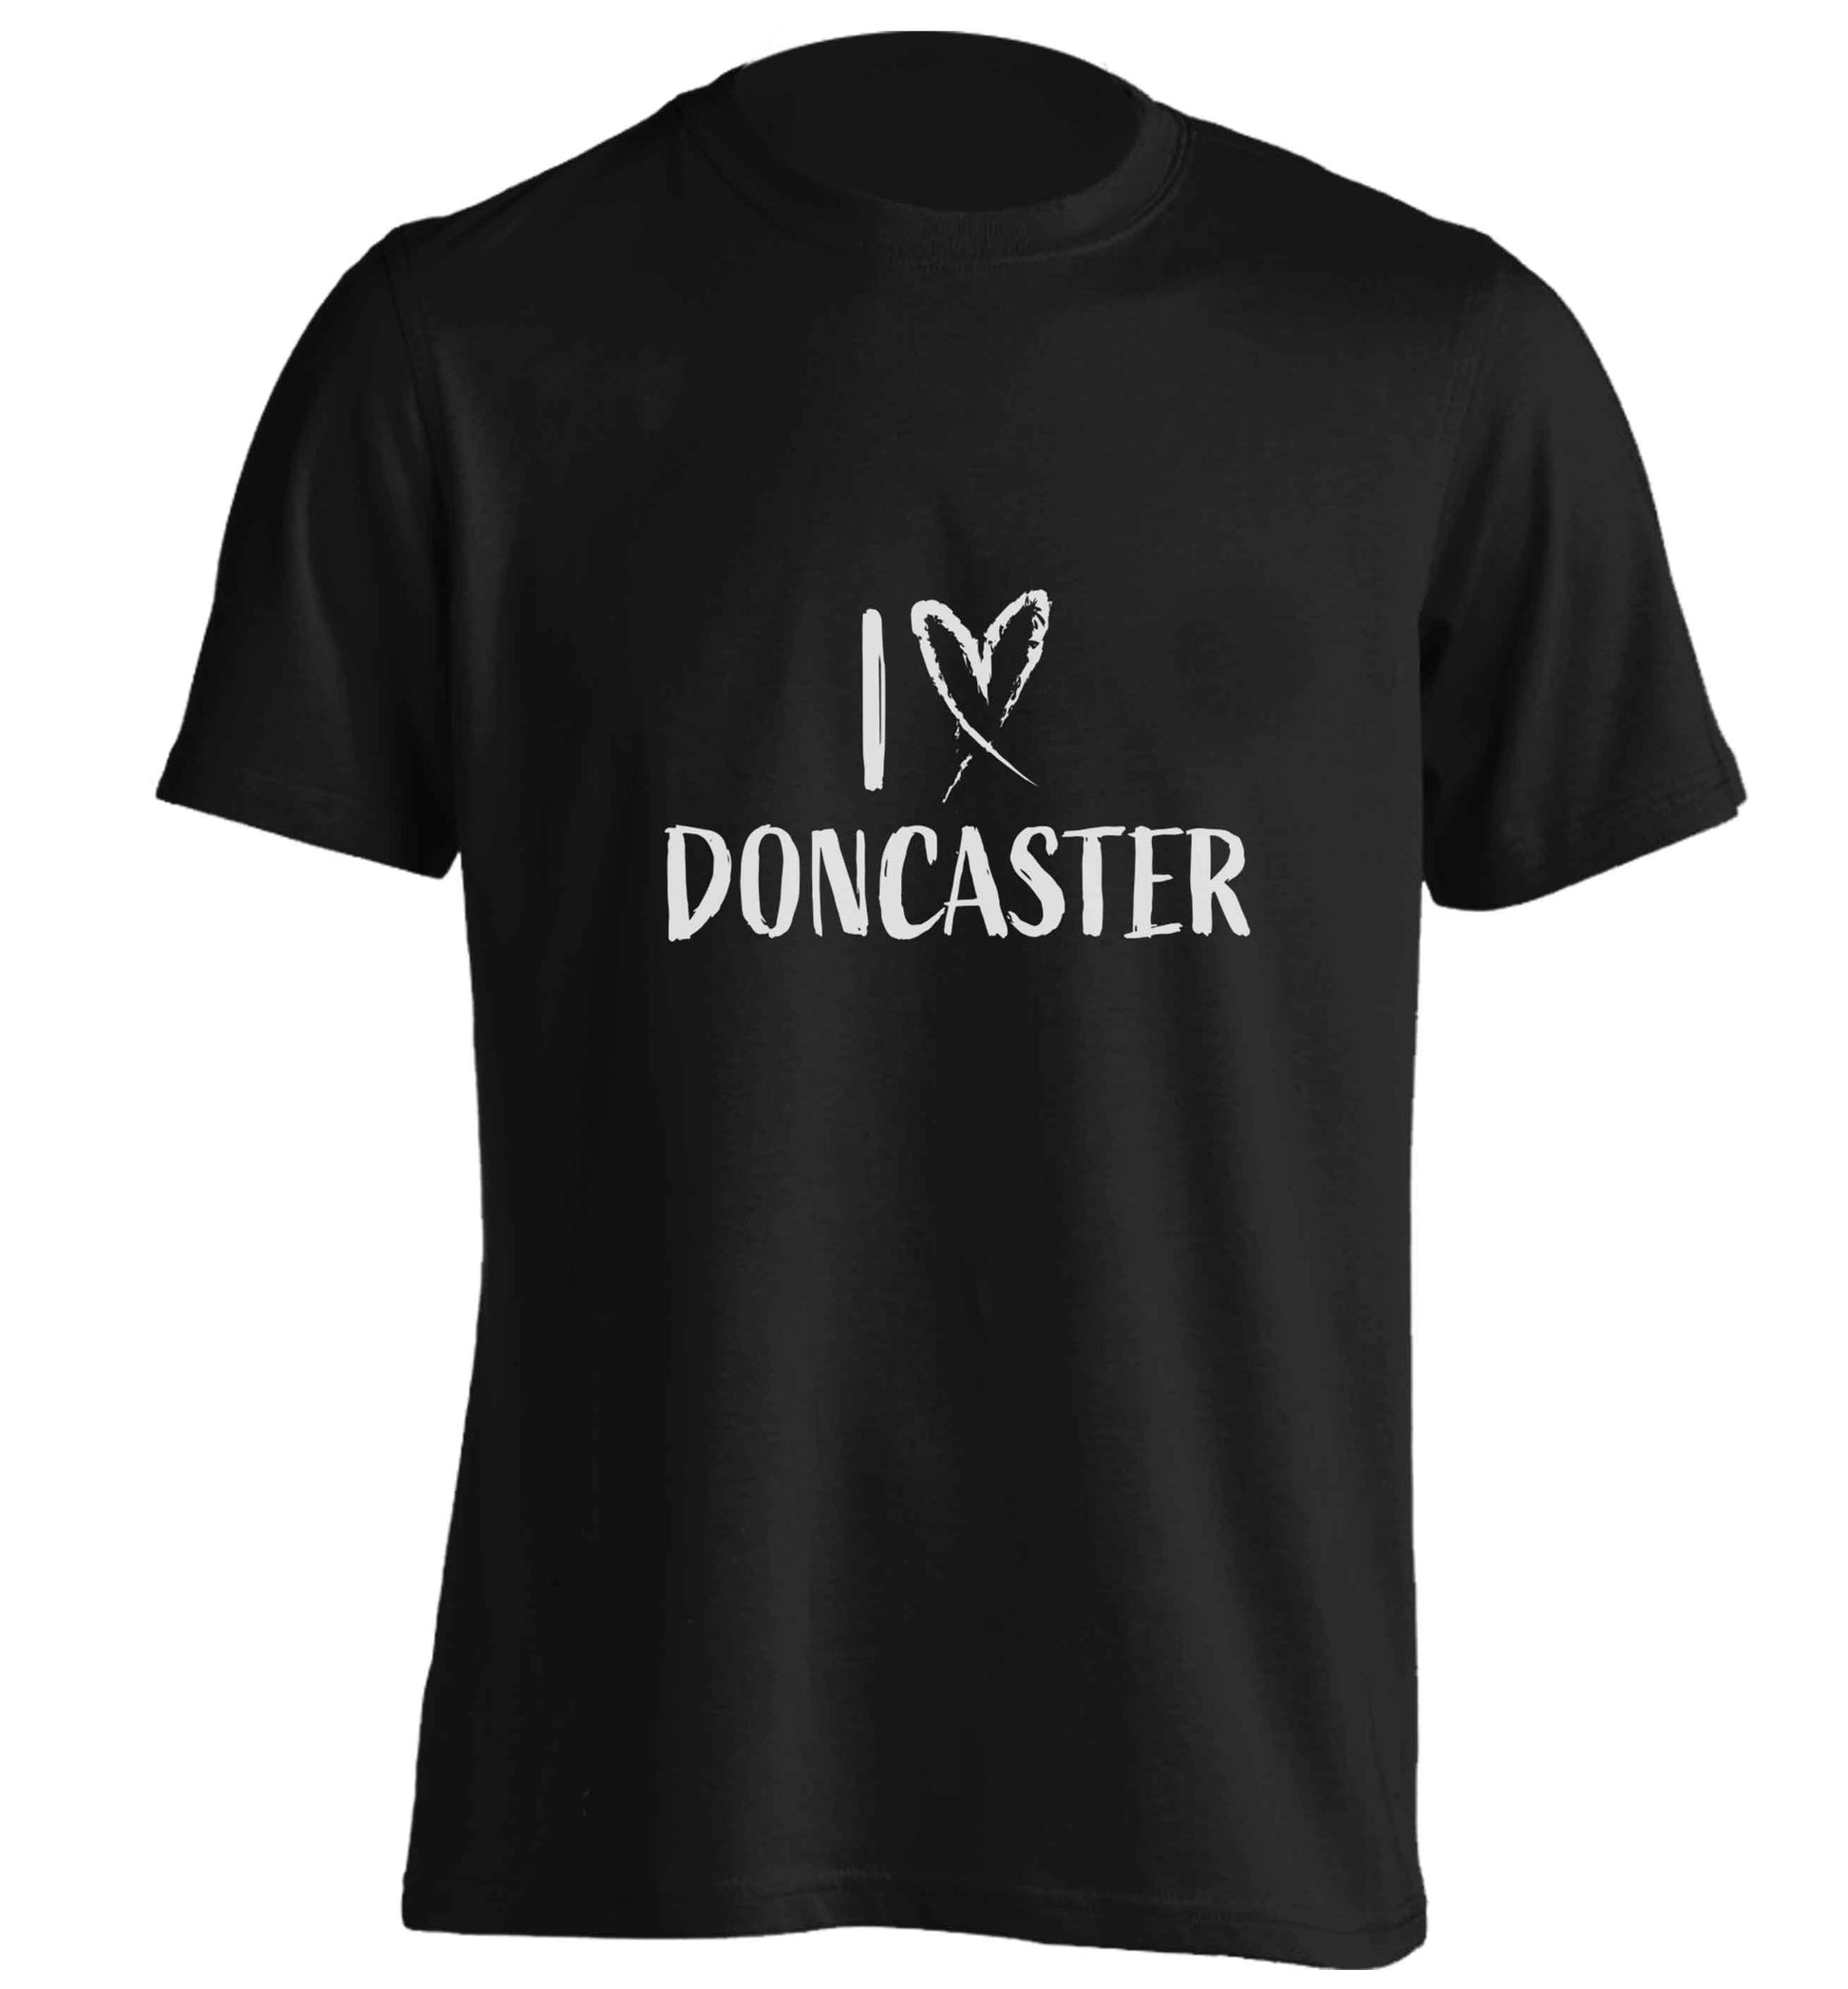 I love Doncaster adults unisex black Tshirt 2XL